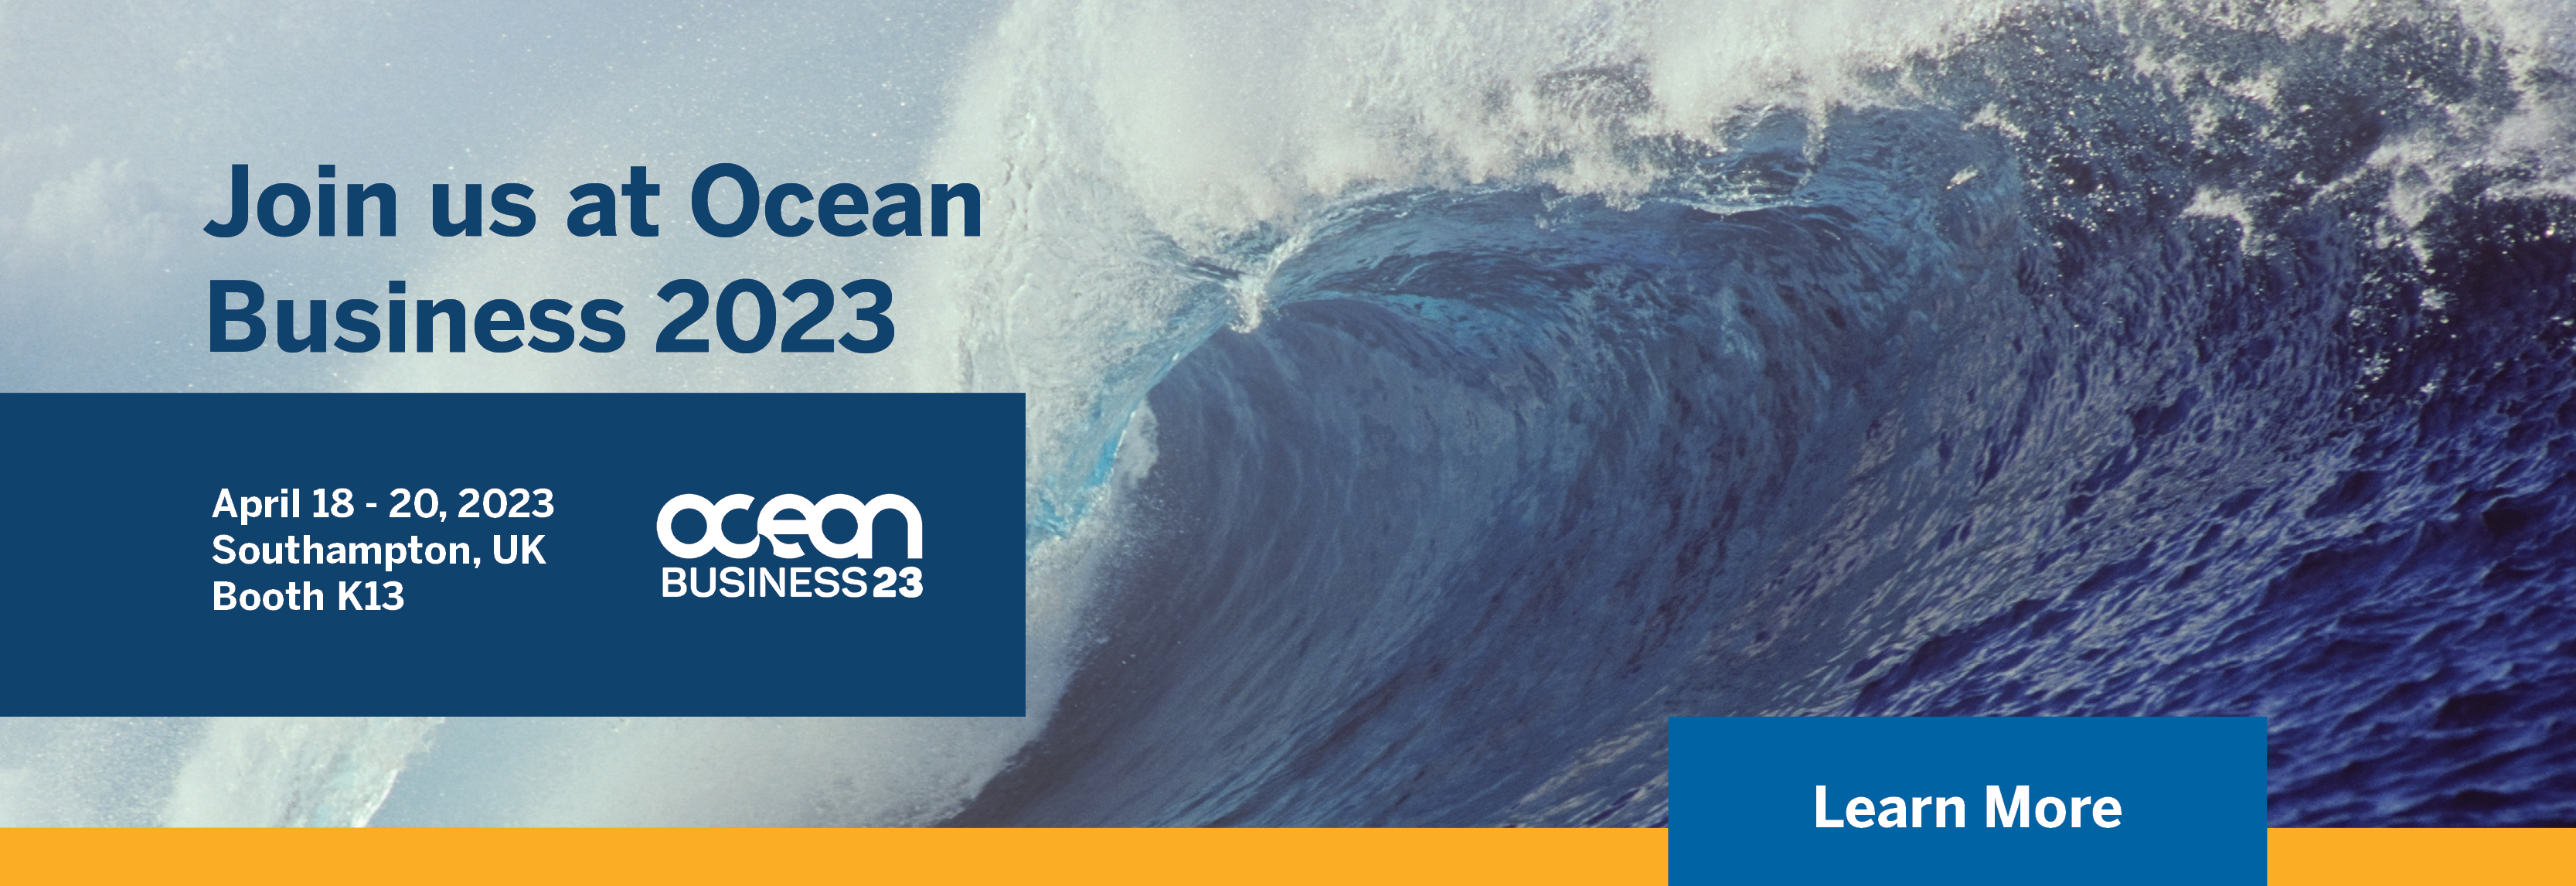 Ocean Business 2023 | April 18 - 20, Southampton, UK